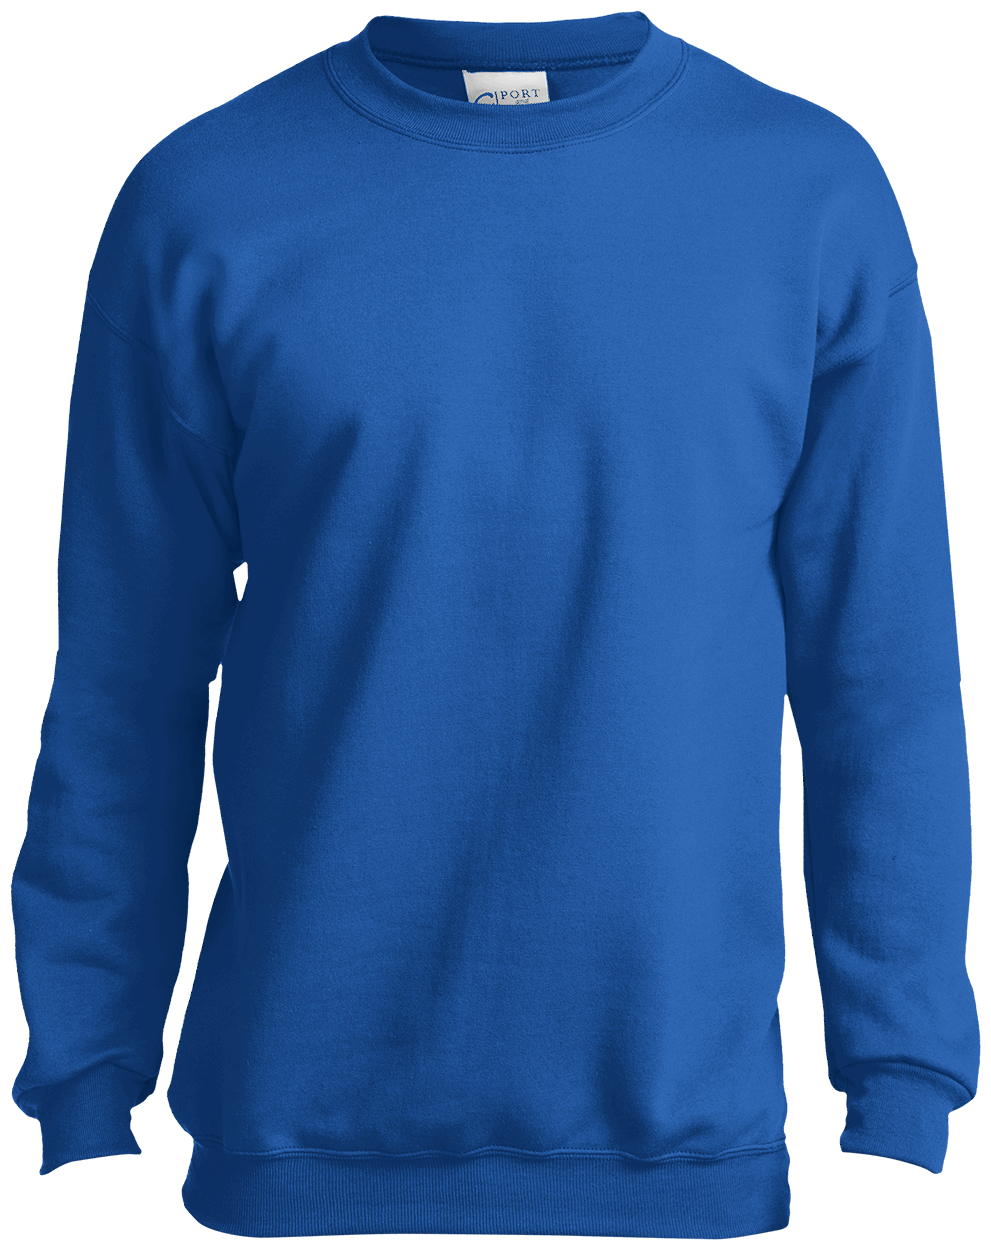 PC90Y Youth Crewneck Sweatshirt - Port & Company - CustomCat